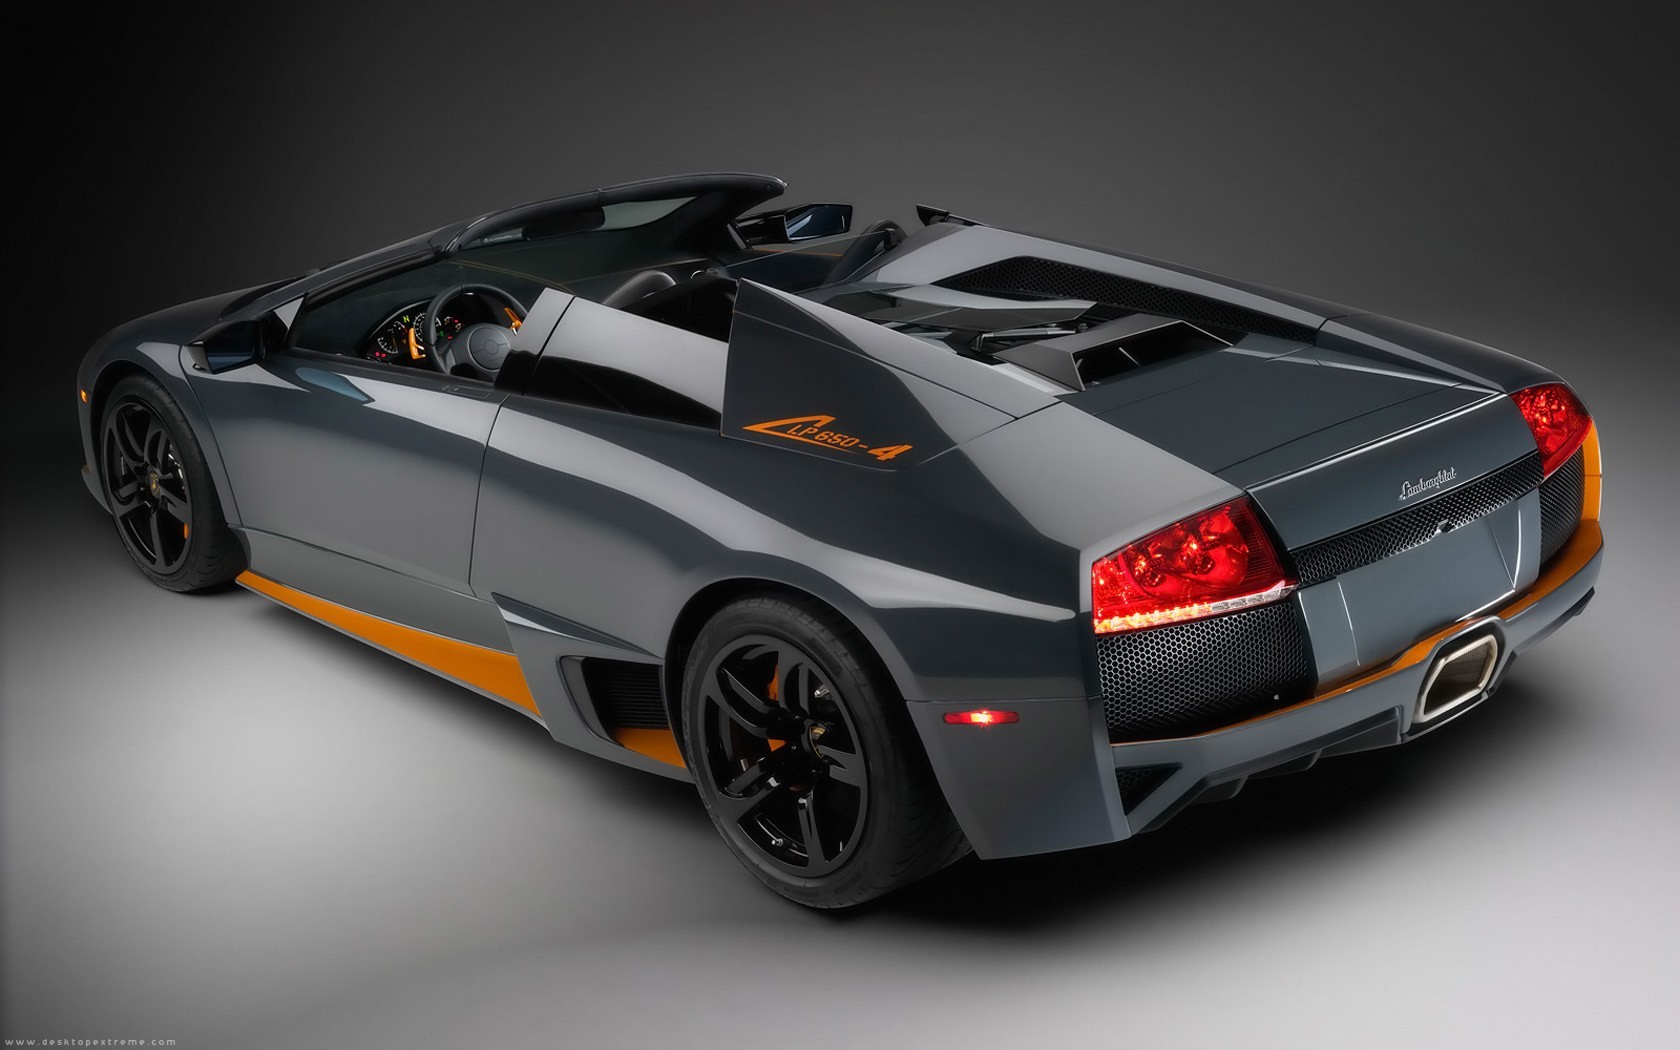 General 1680x1050 Lamborghini car black cars gray background vehicle Lamborghini Murcielago italian cars Volkswagen Group